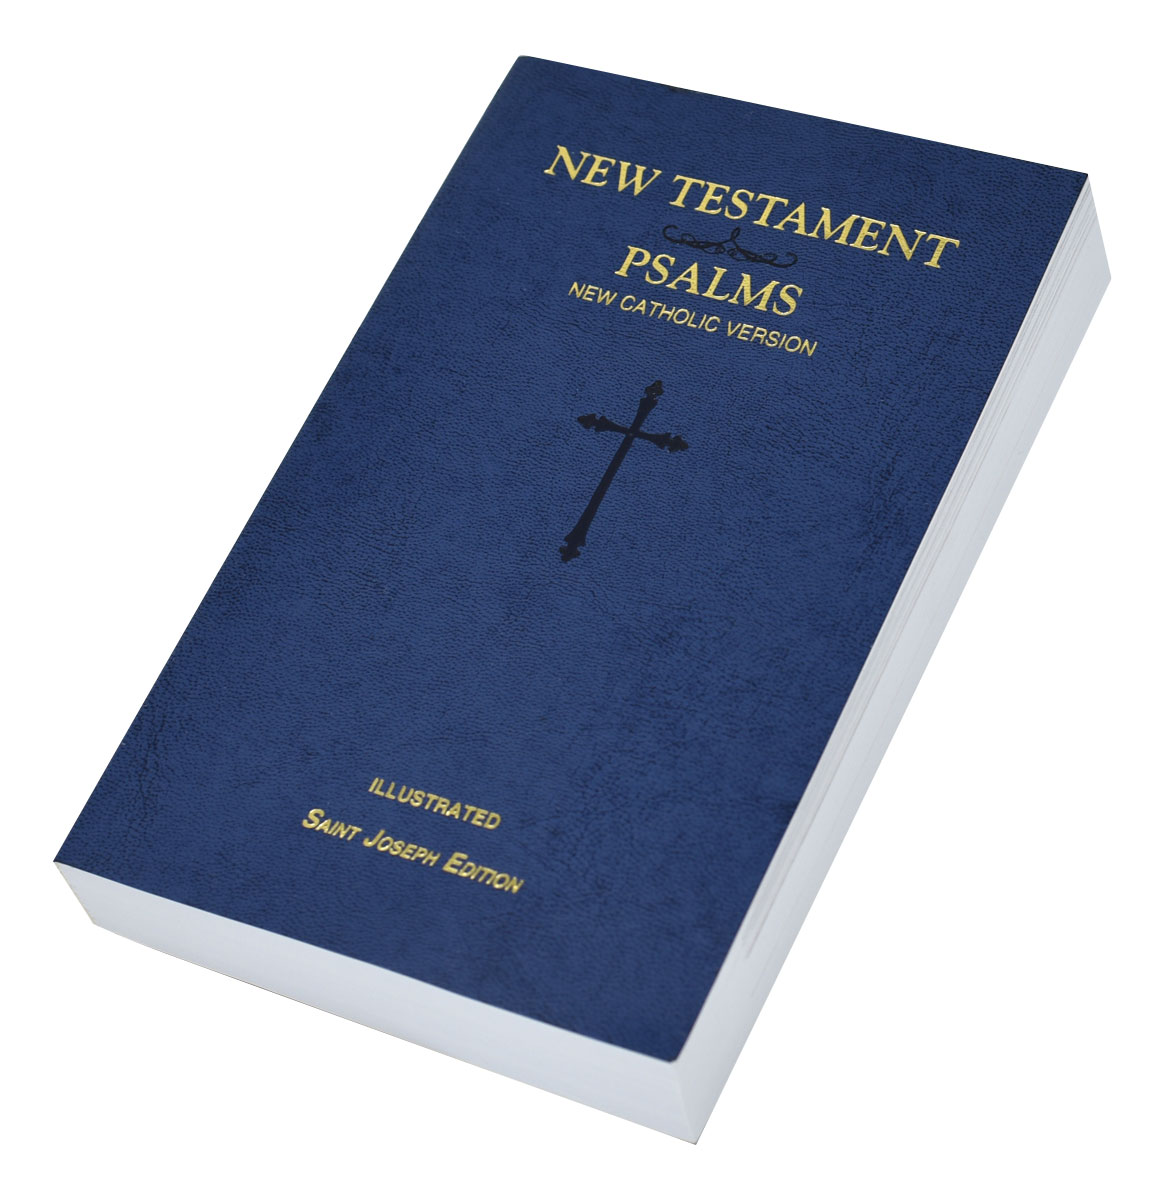 St. Joseph New Catholic Version New Testament and Psalms Blue Flexible Binding 647/04BLU